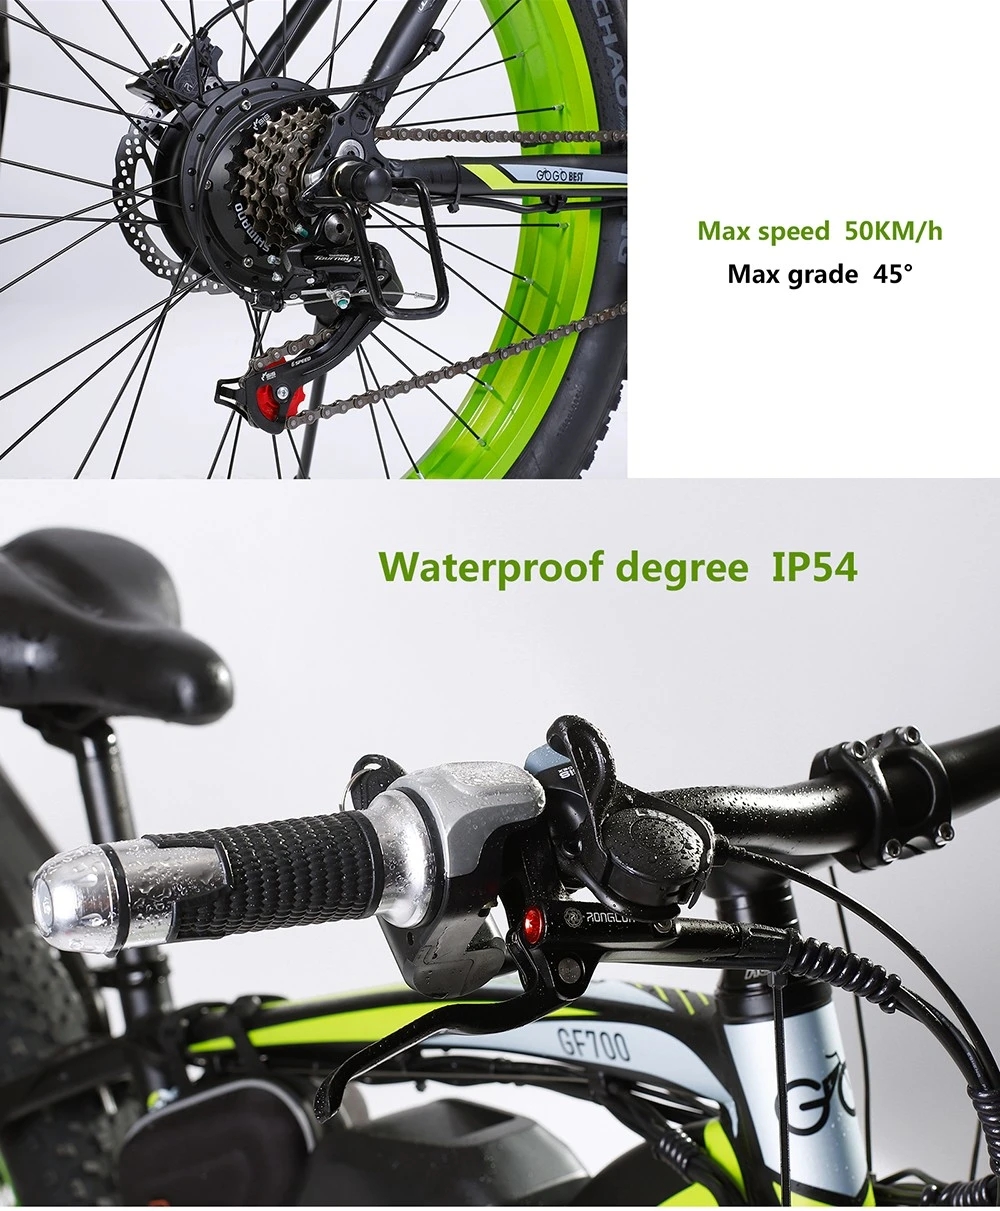 [US DIRECT] GOGOBEST GF700 48V 17.5AH 1000W Electric Bicycle 26*4.0 Inch 70KM Mileage Range Max Load 200KG